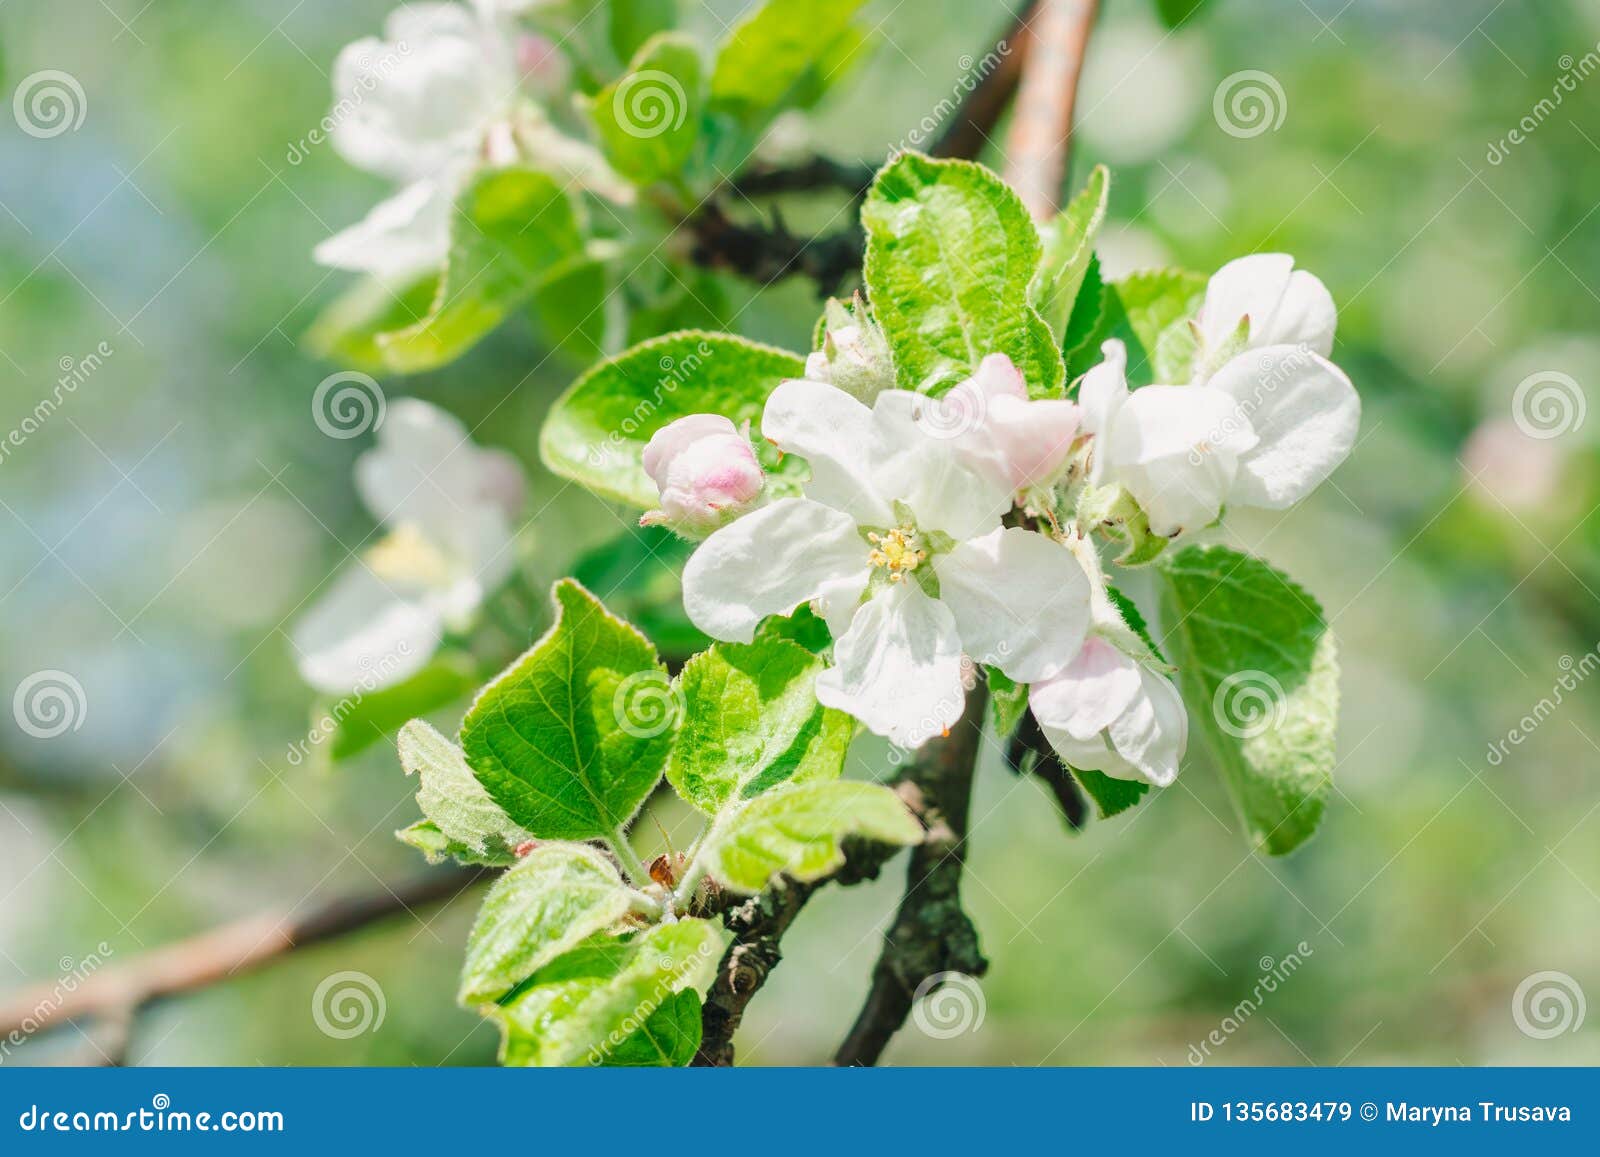 Blossoming Garden In Spring Day, Flowers Of Apple Tree. The Awakening